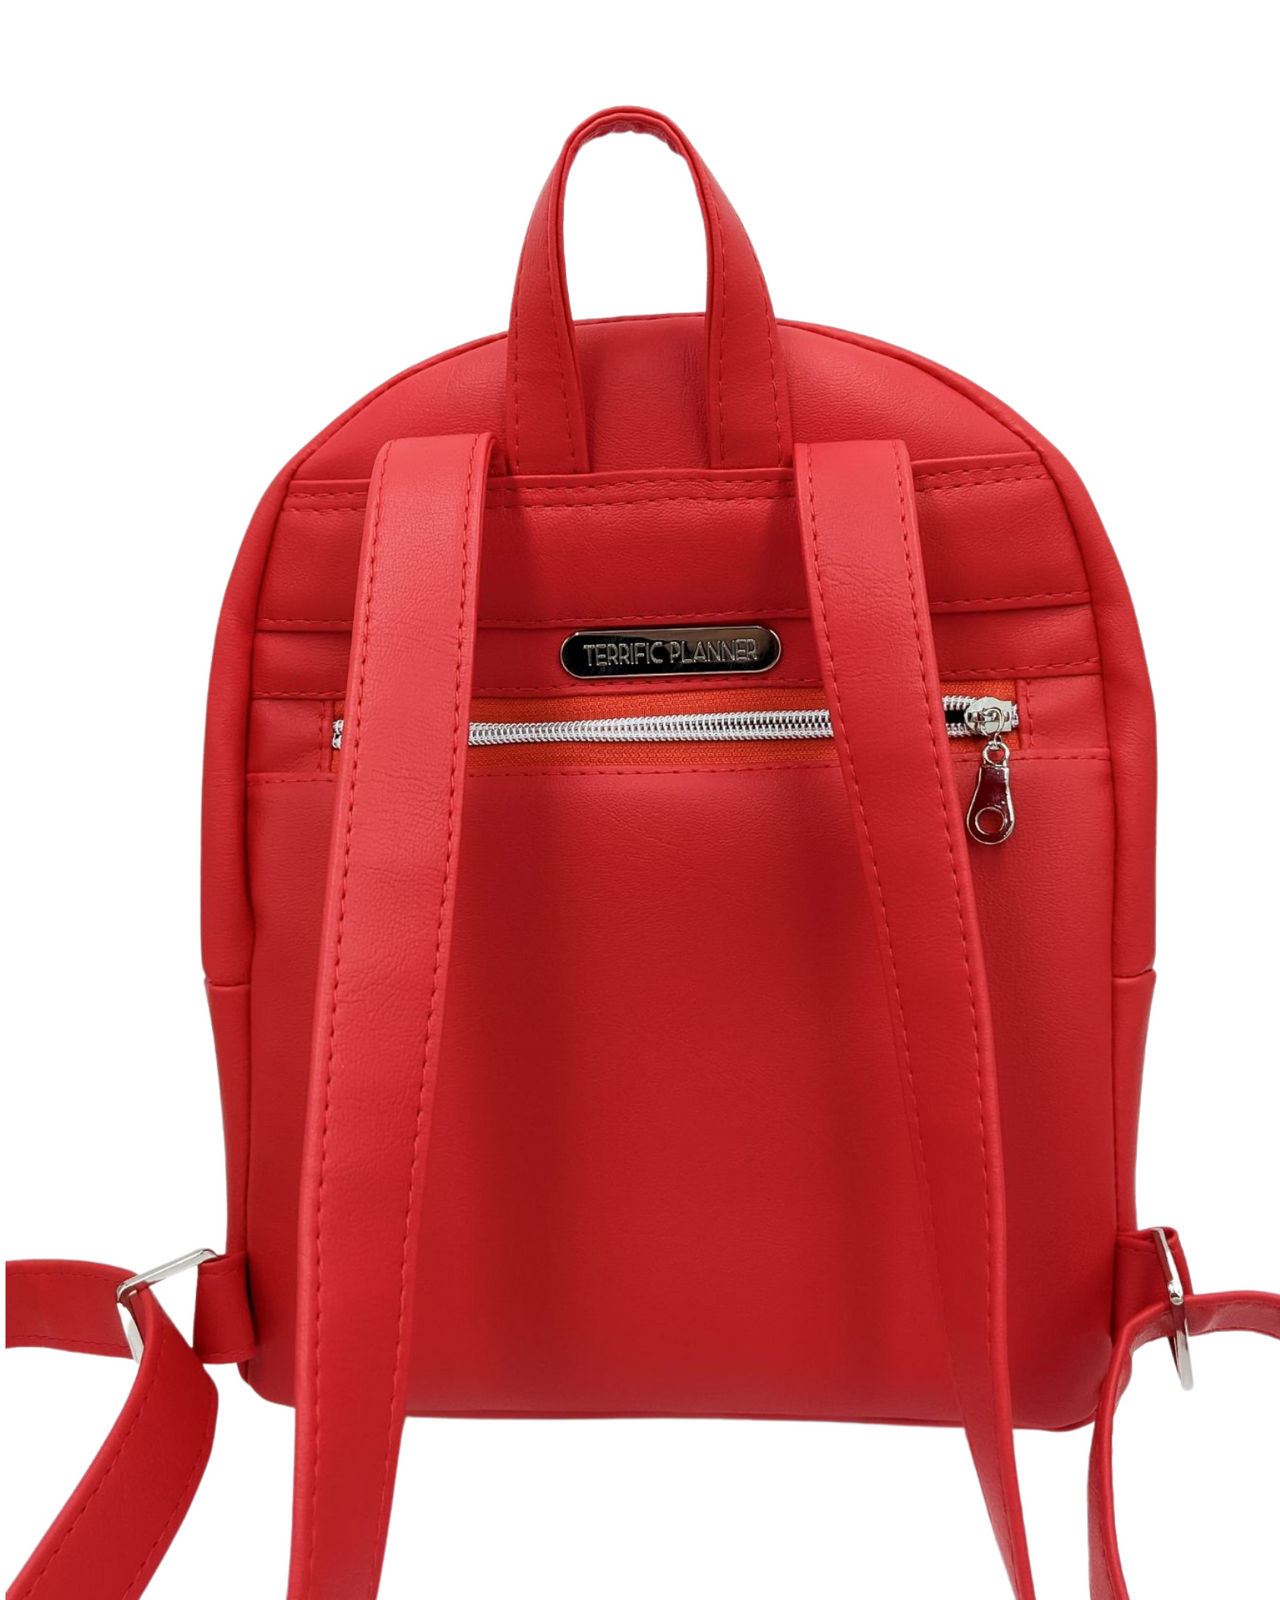 Selena Red Roses Mini Backpack